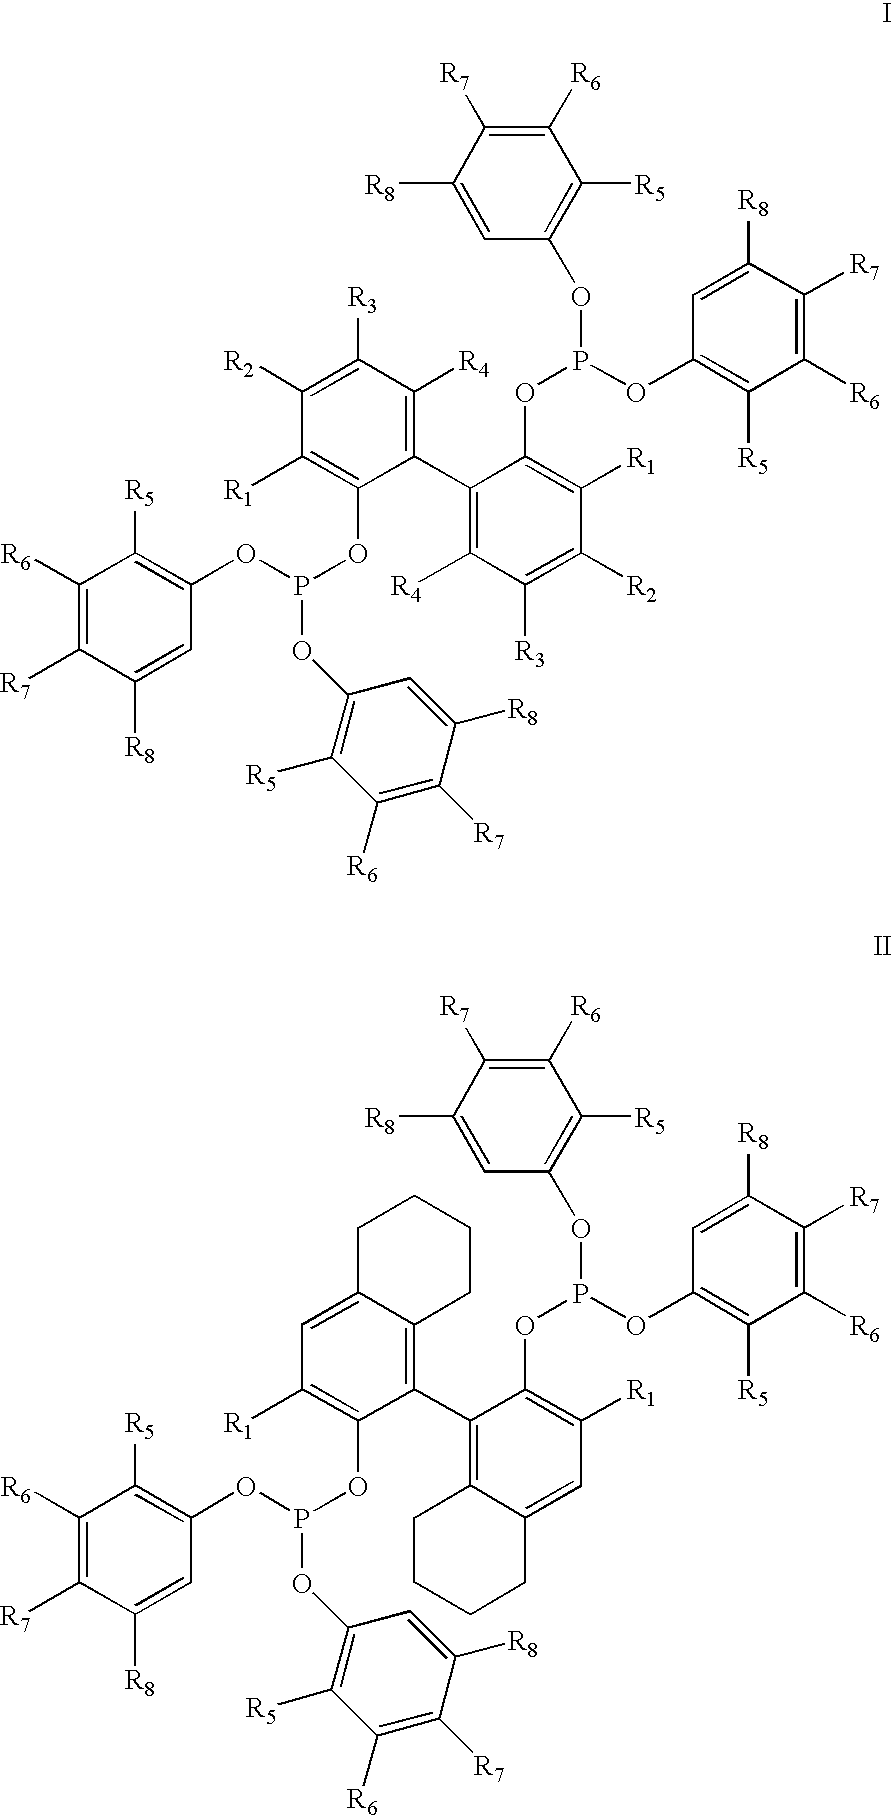 Hydrocyanation of 2-pentenenitrile